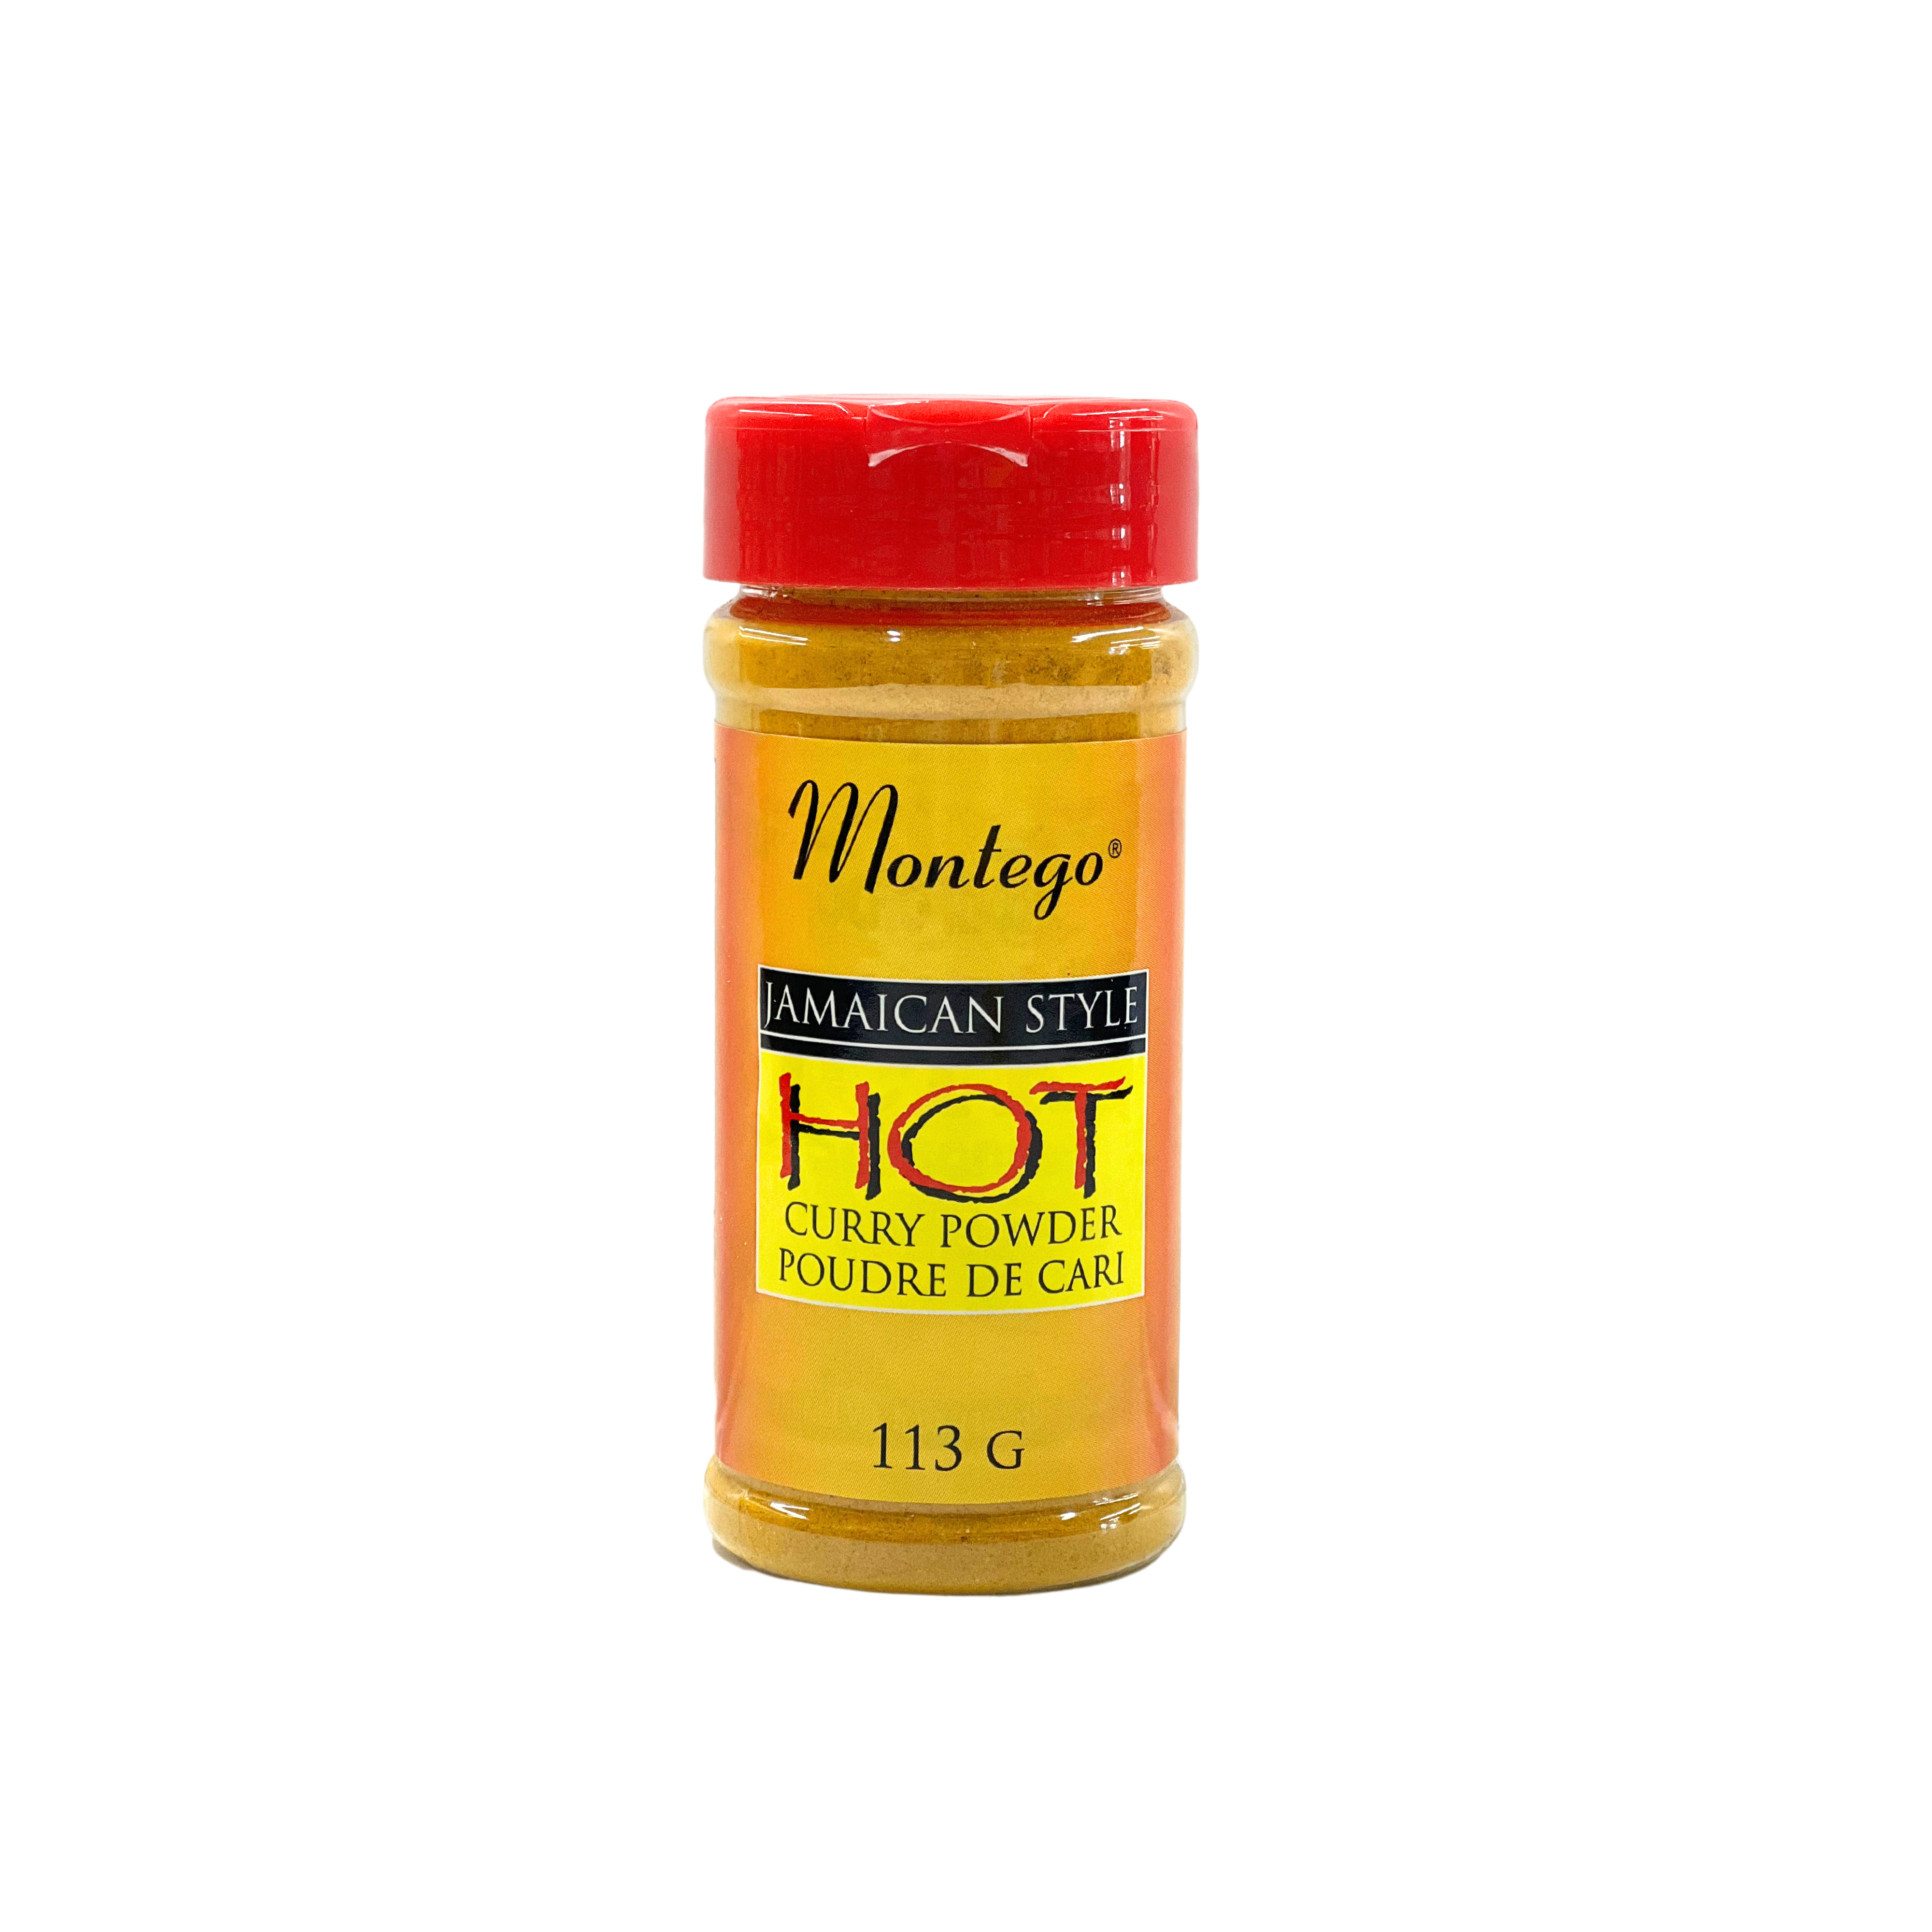 Montego Curry Powder Hot 113g